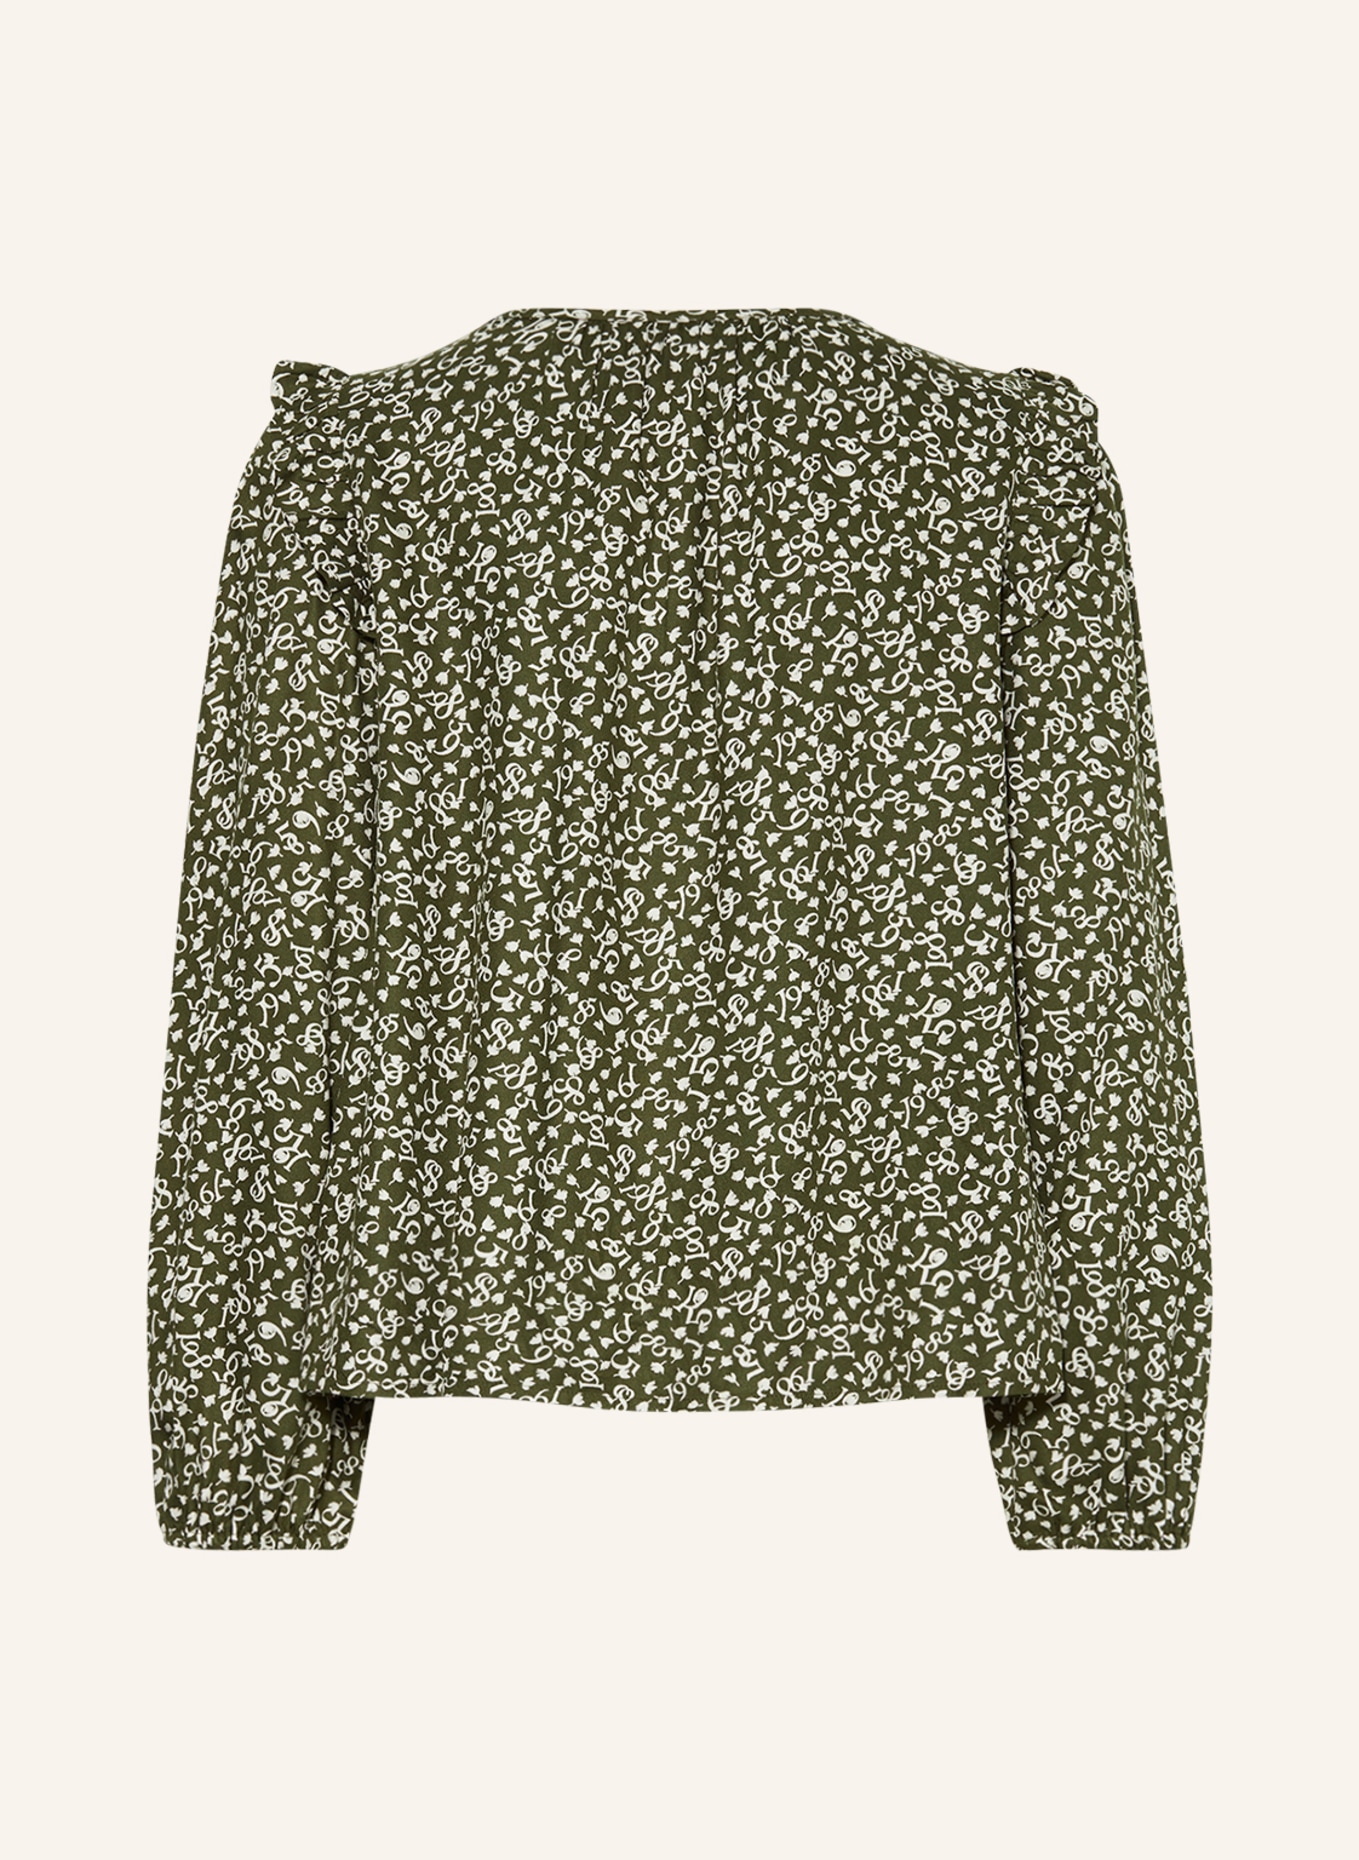 TOMMY HILFIGER Blusenshirt, Farbe: OLIV/ WEISS (Bild 2)